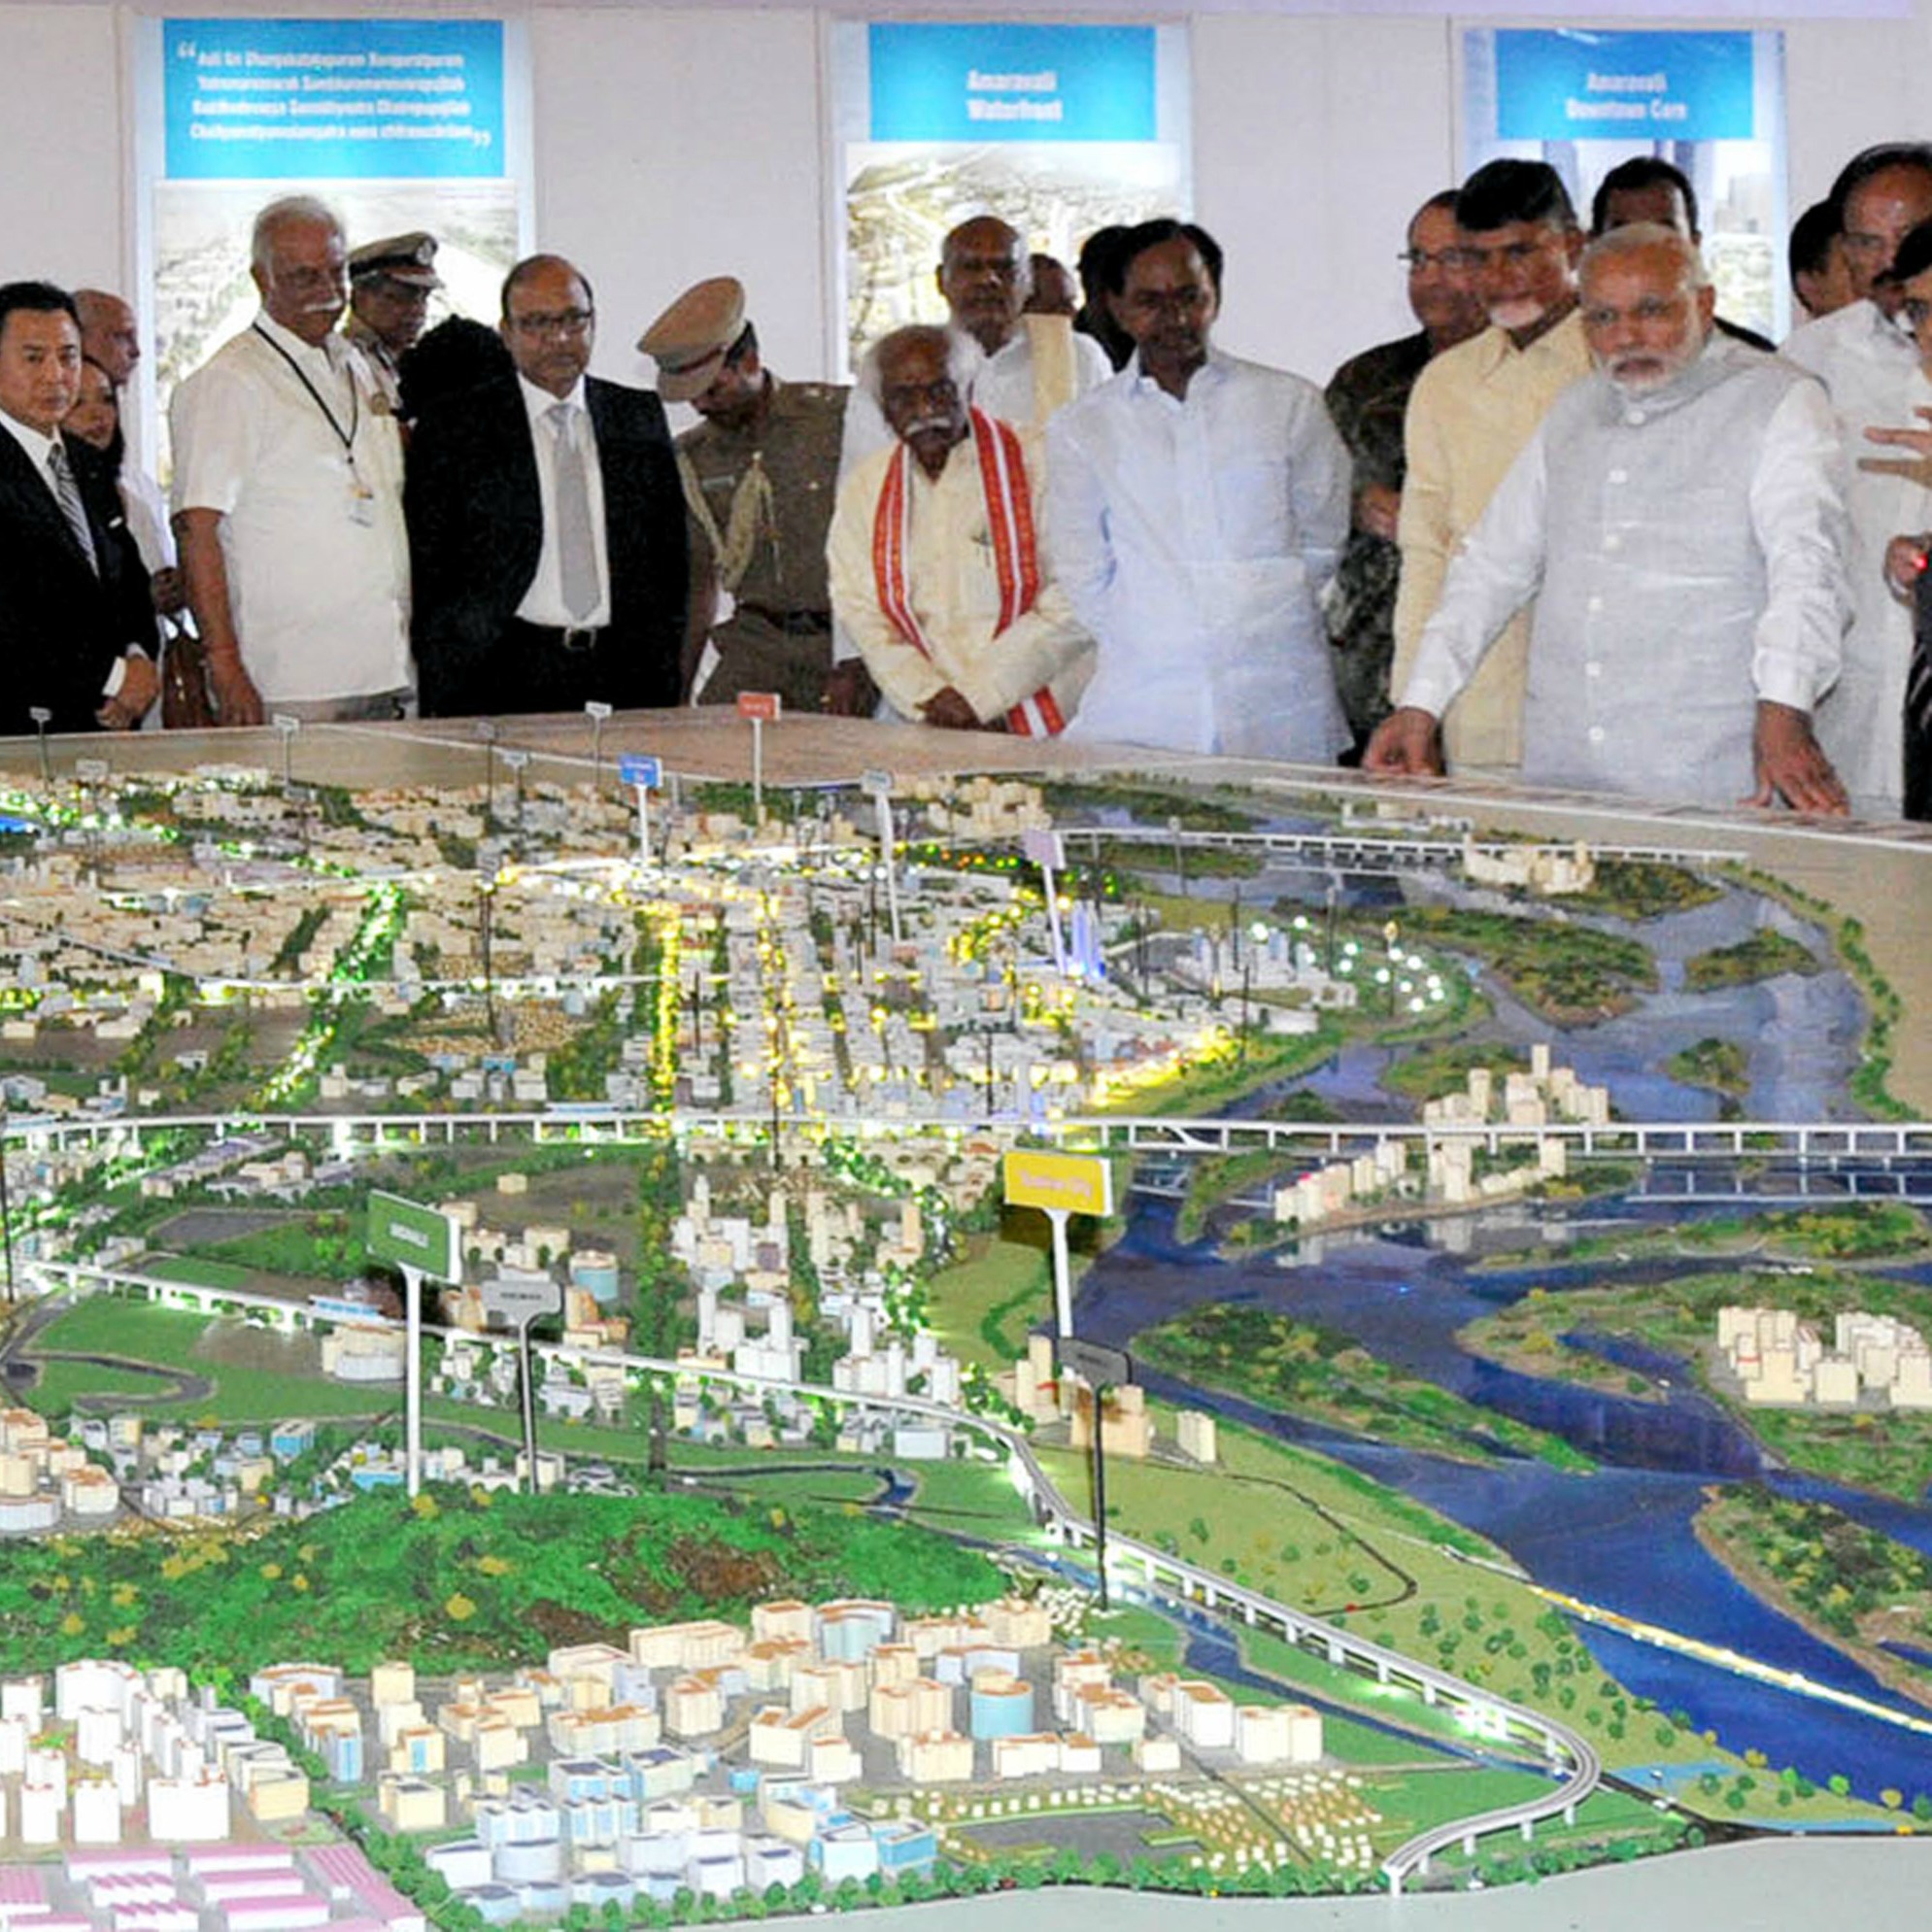 PM Modi looks at plans for Amaravati, the new capital of Andhra Pradesh AFP